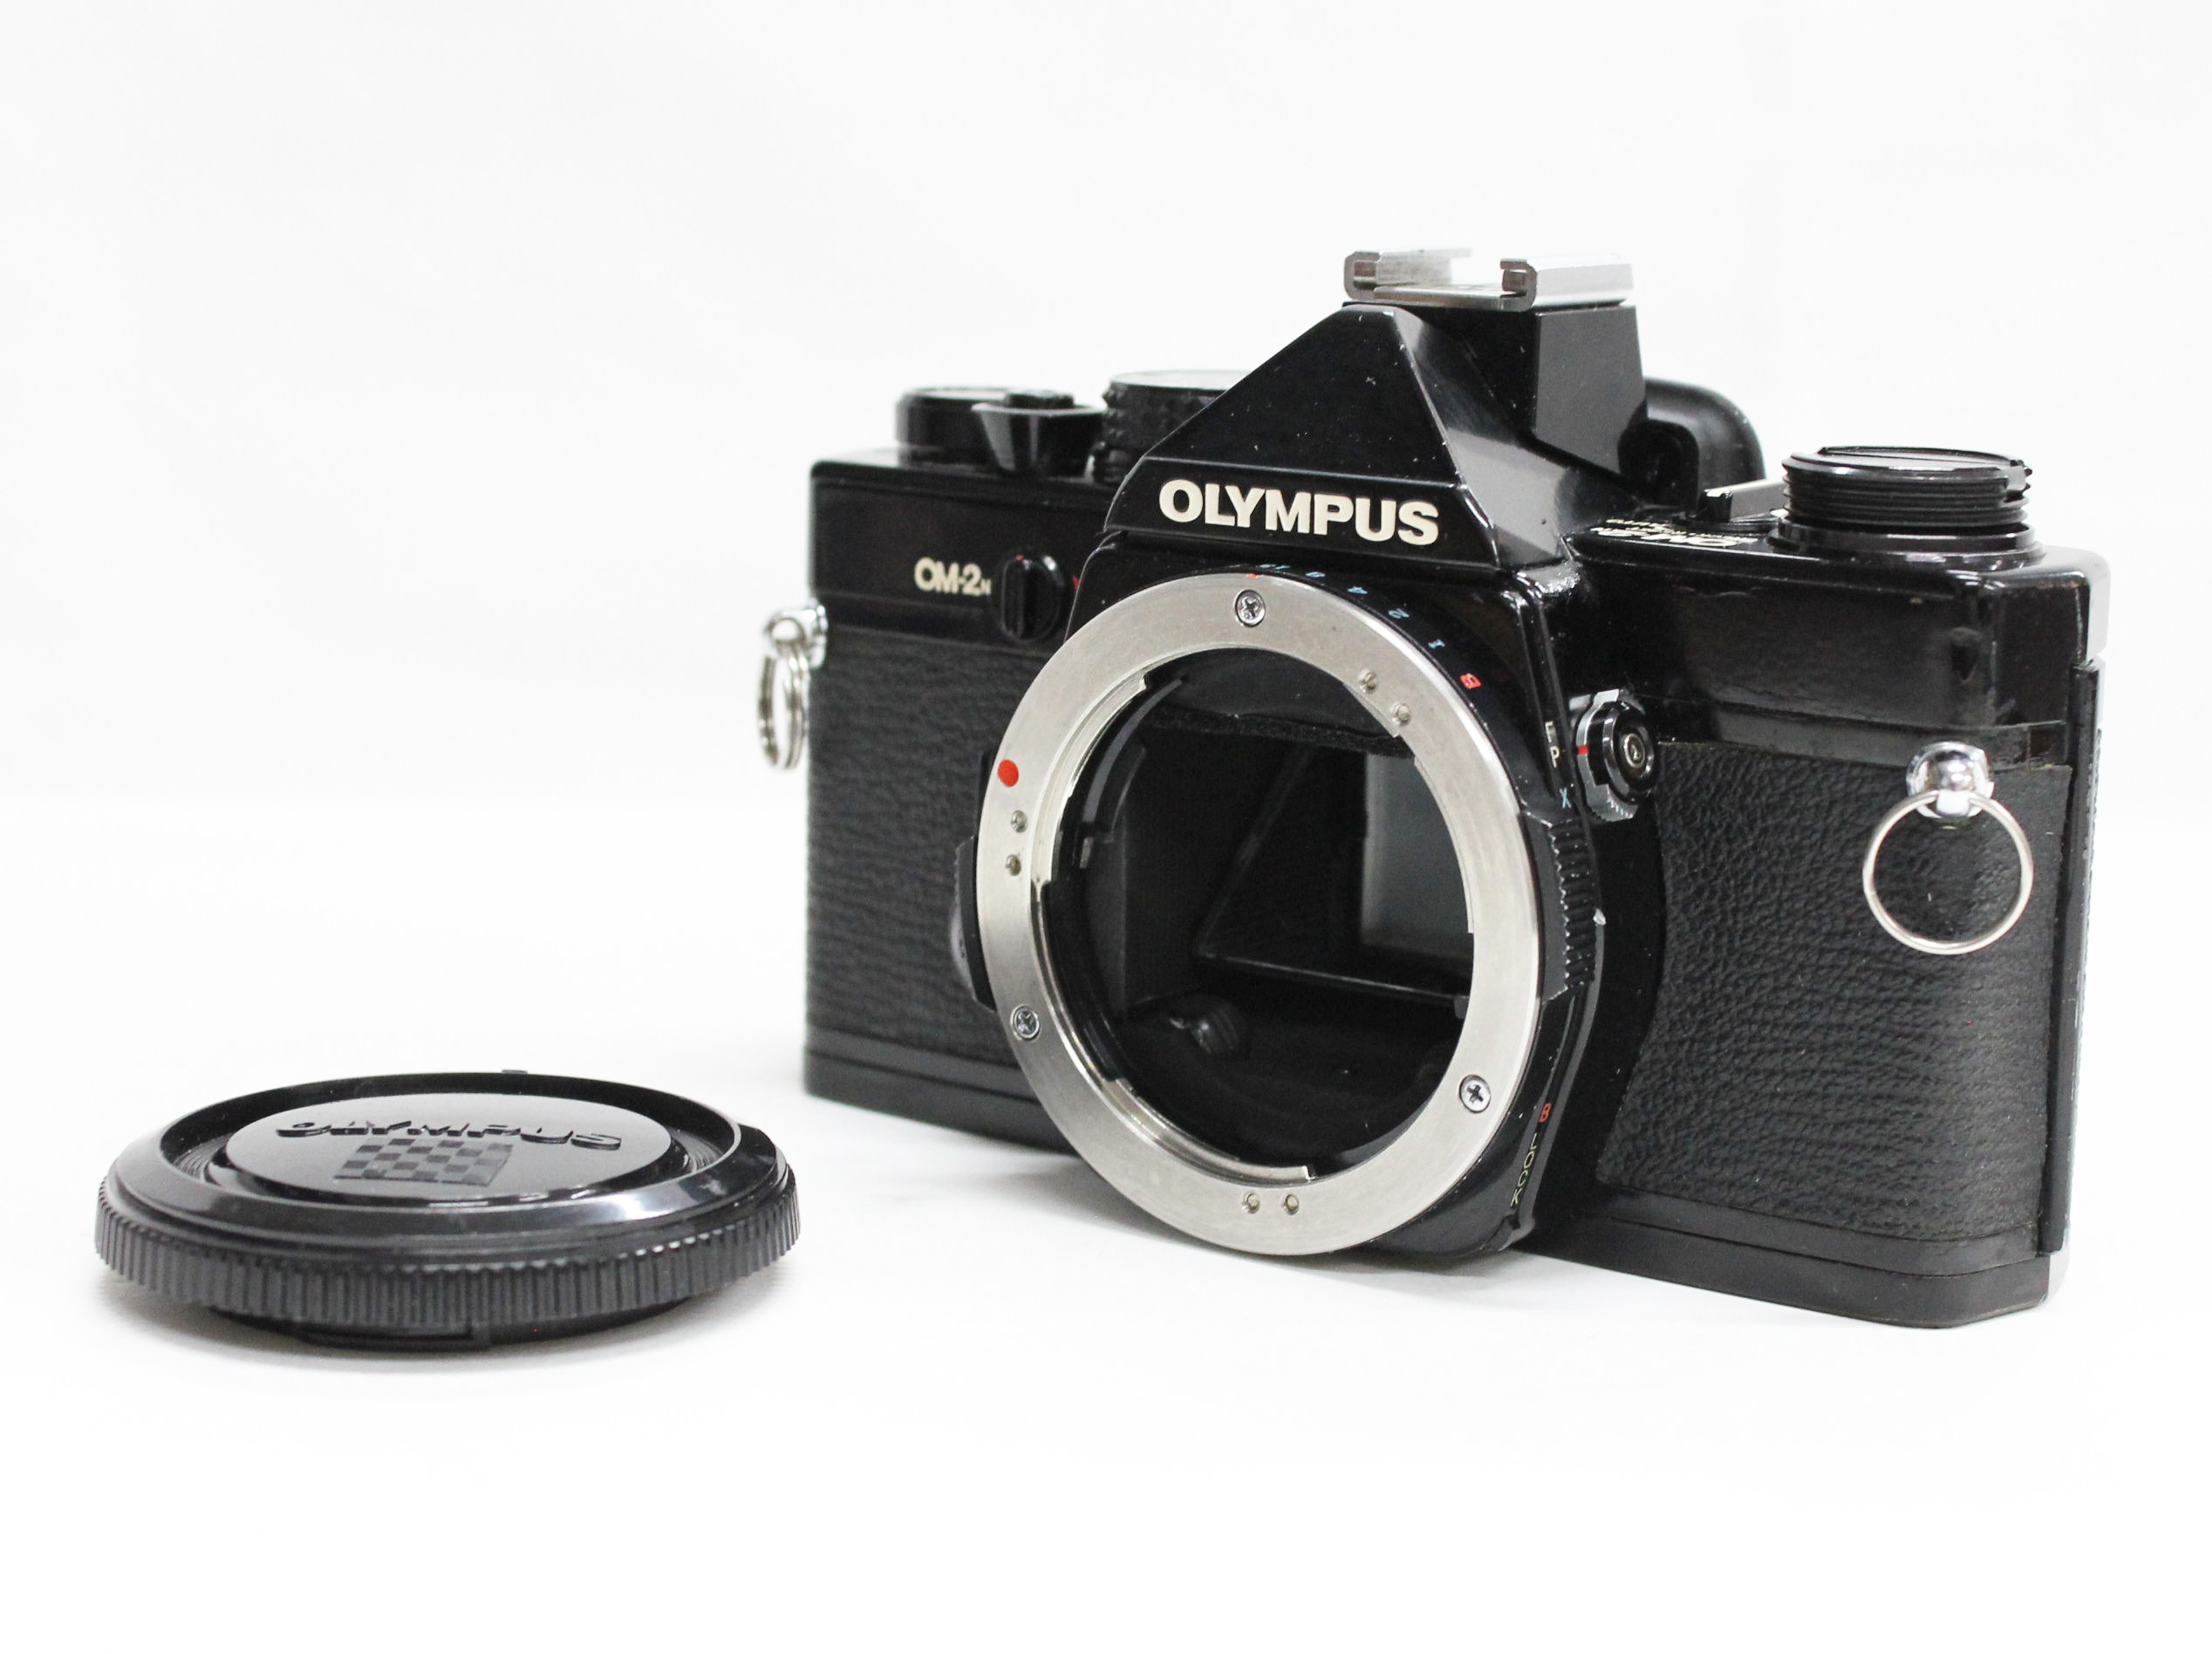 [Excellent++] Olympus OM-2n 35mm SLR Film Camera Body Black from Japan